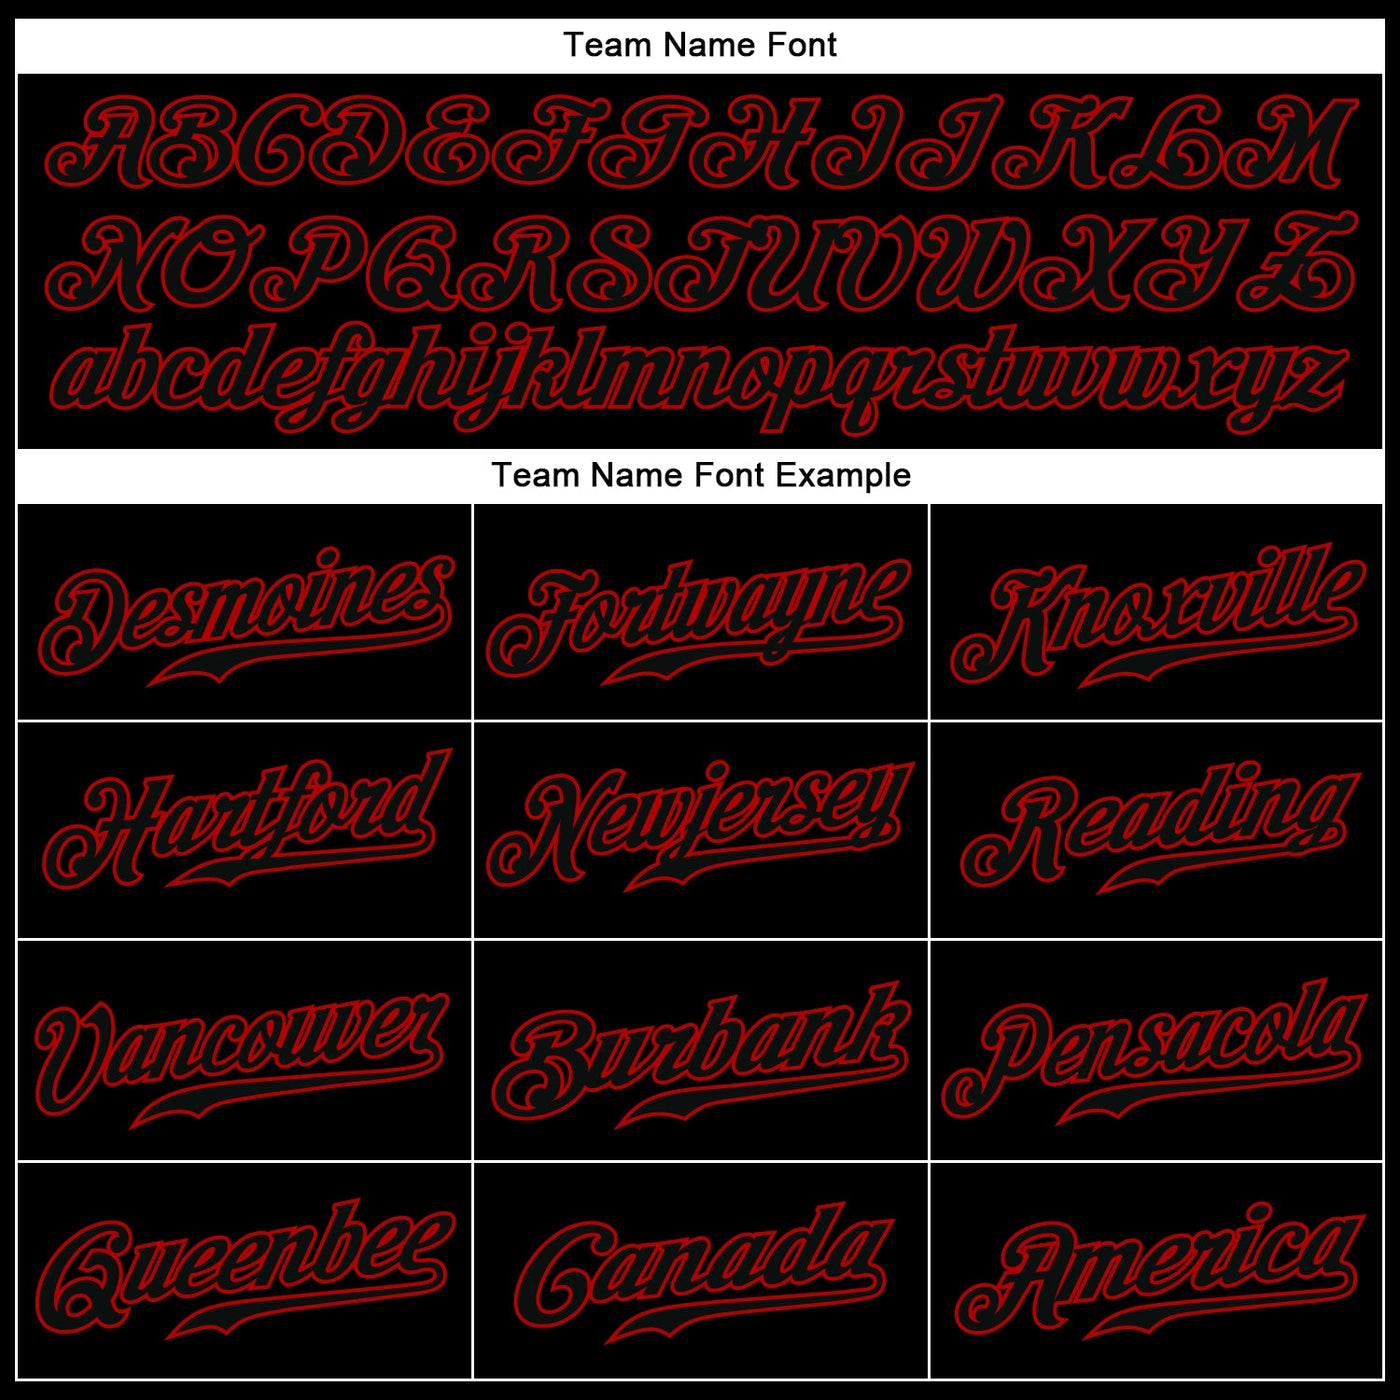 Custom Black Black-Red Authentic Baseball Jersey - Owls Matrix LTD